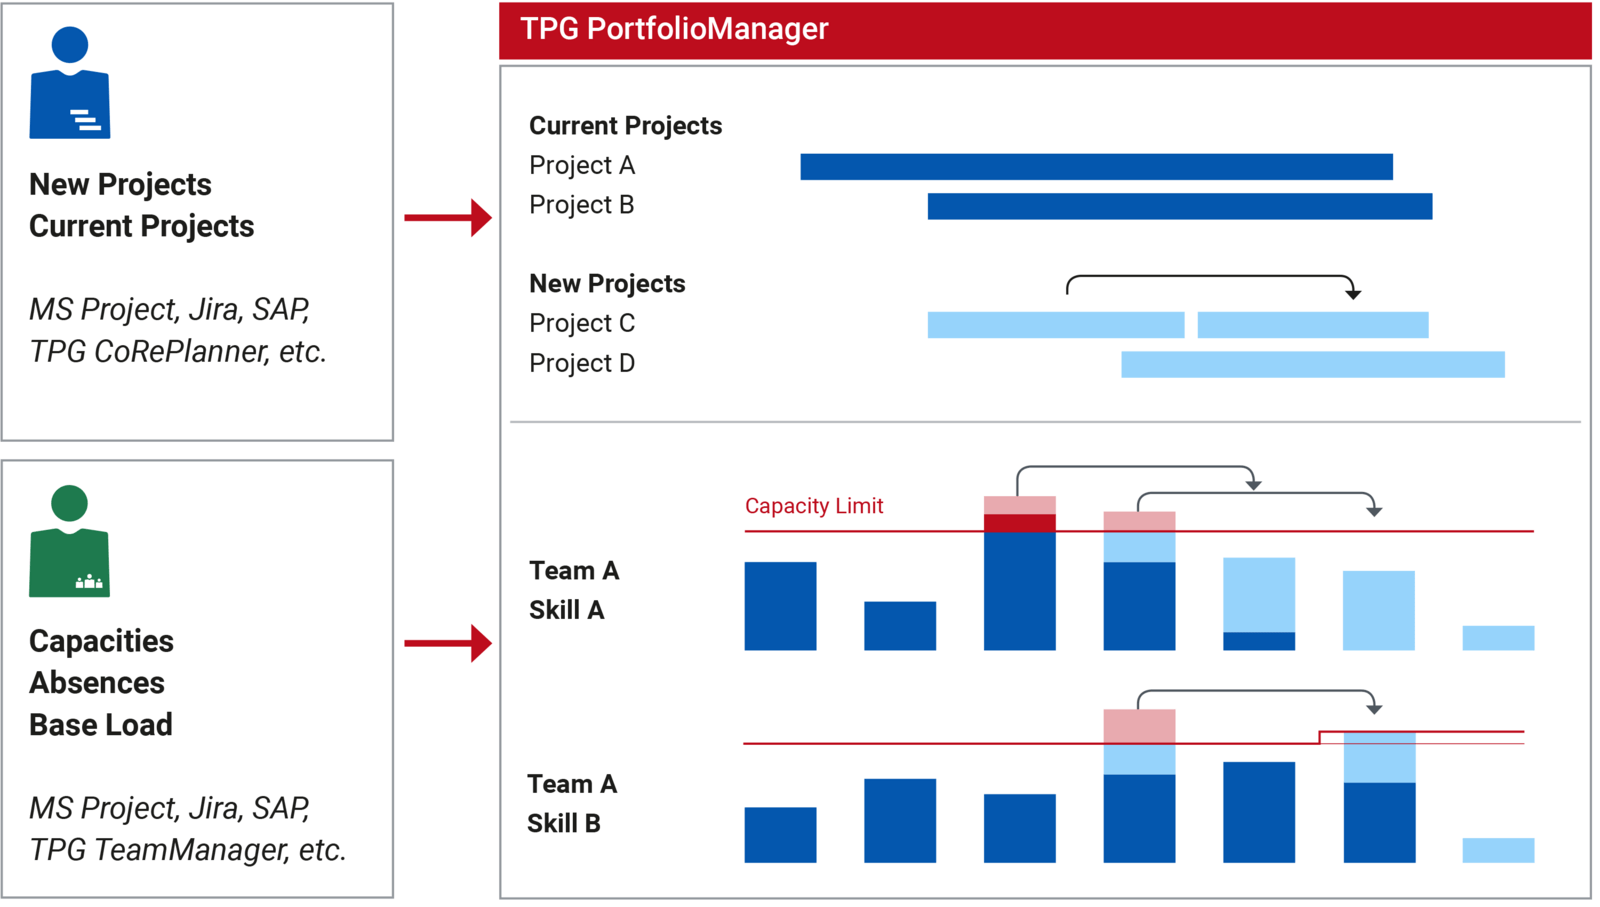 Success factors for multi-project management – Project progression with TPG PortfolioManager